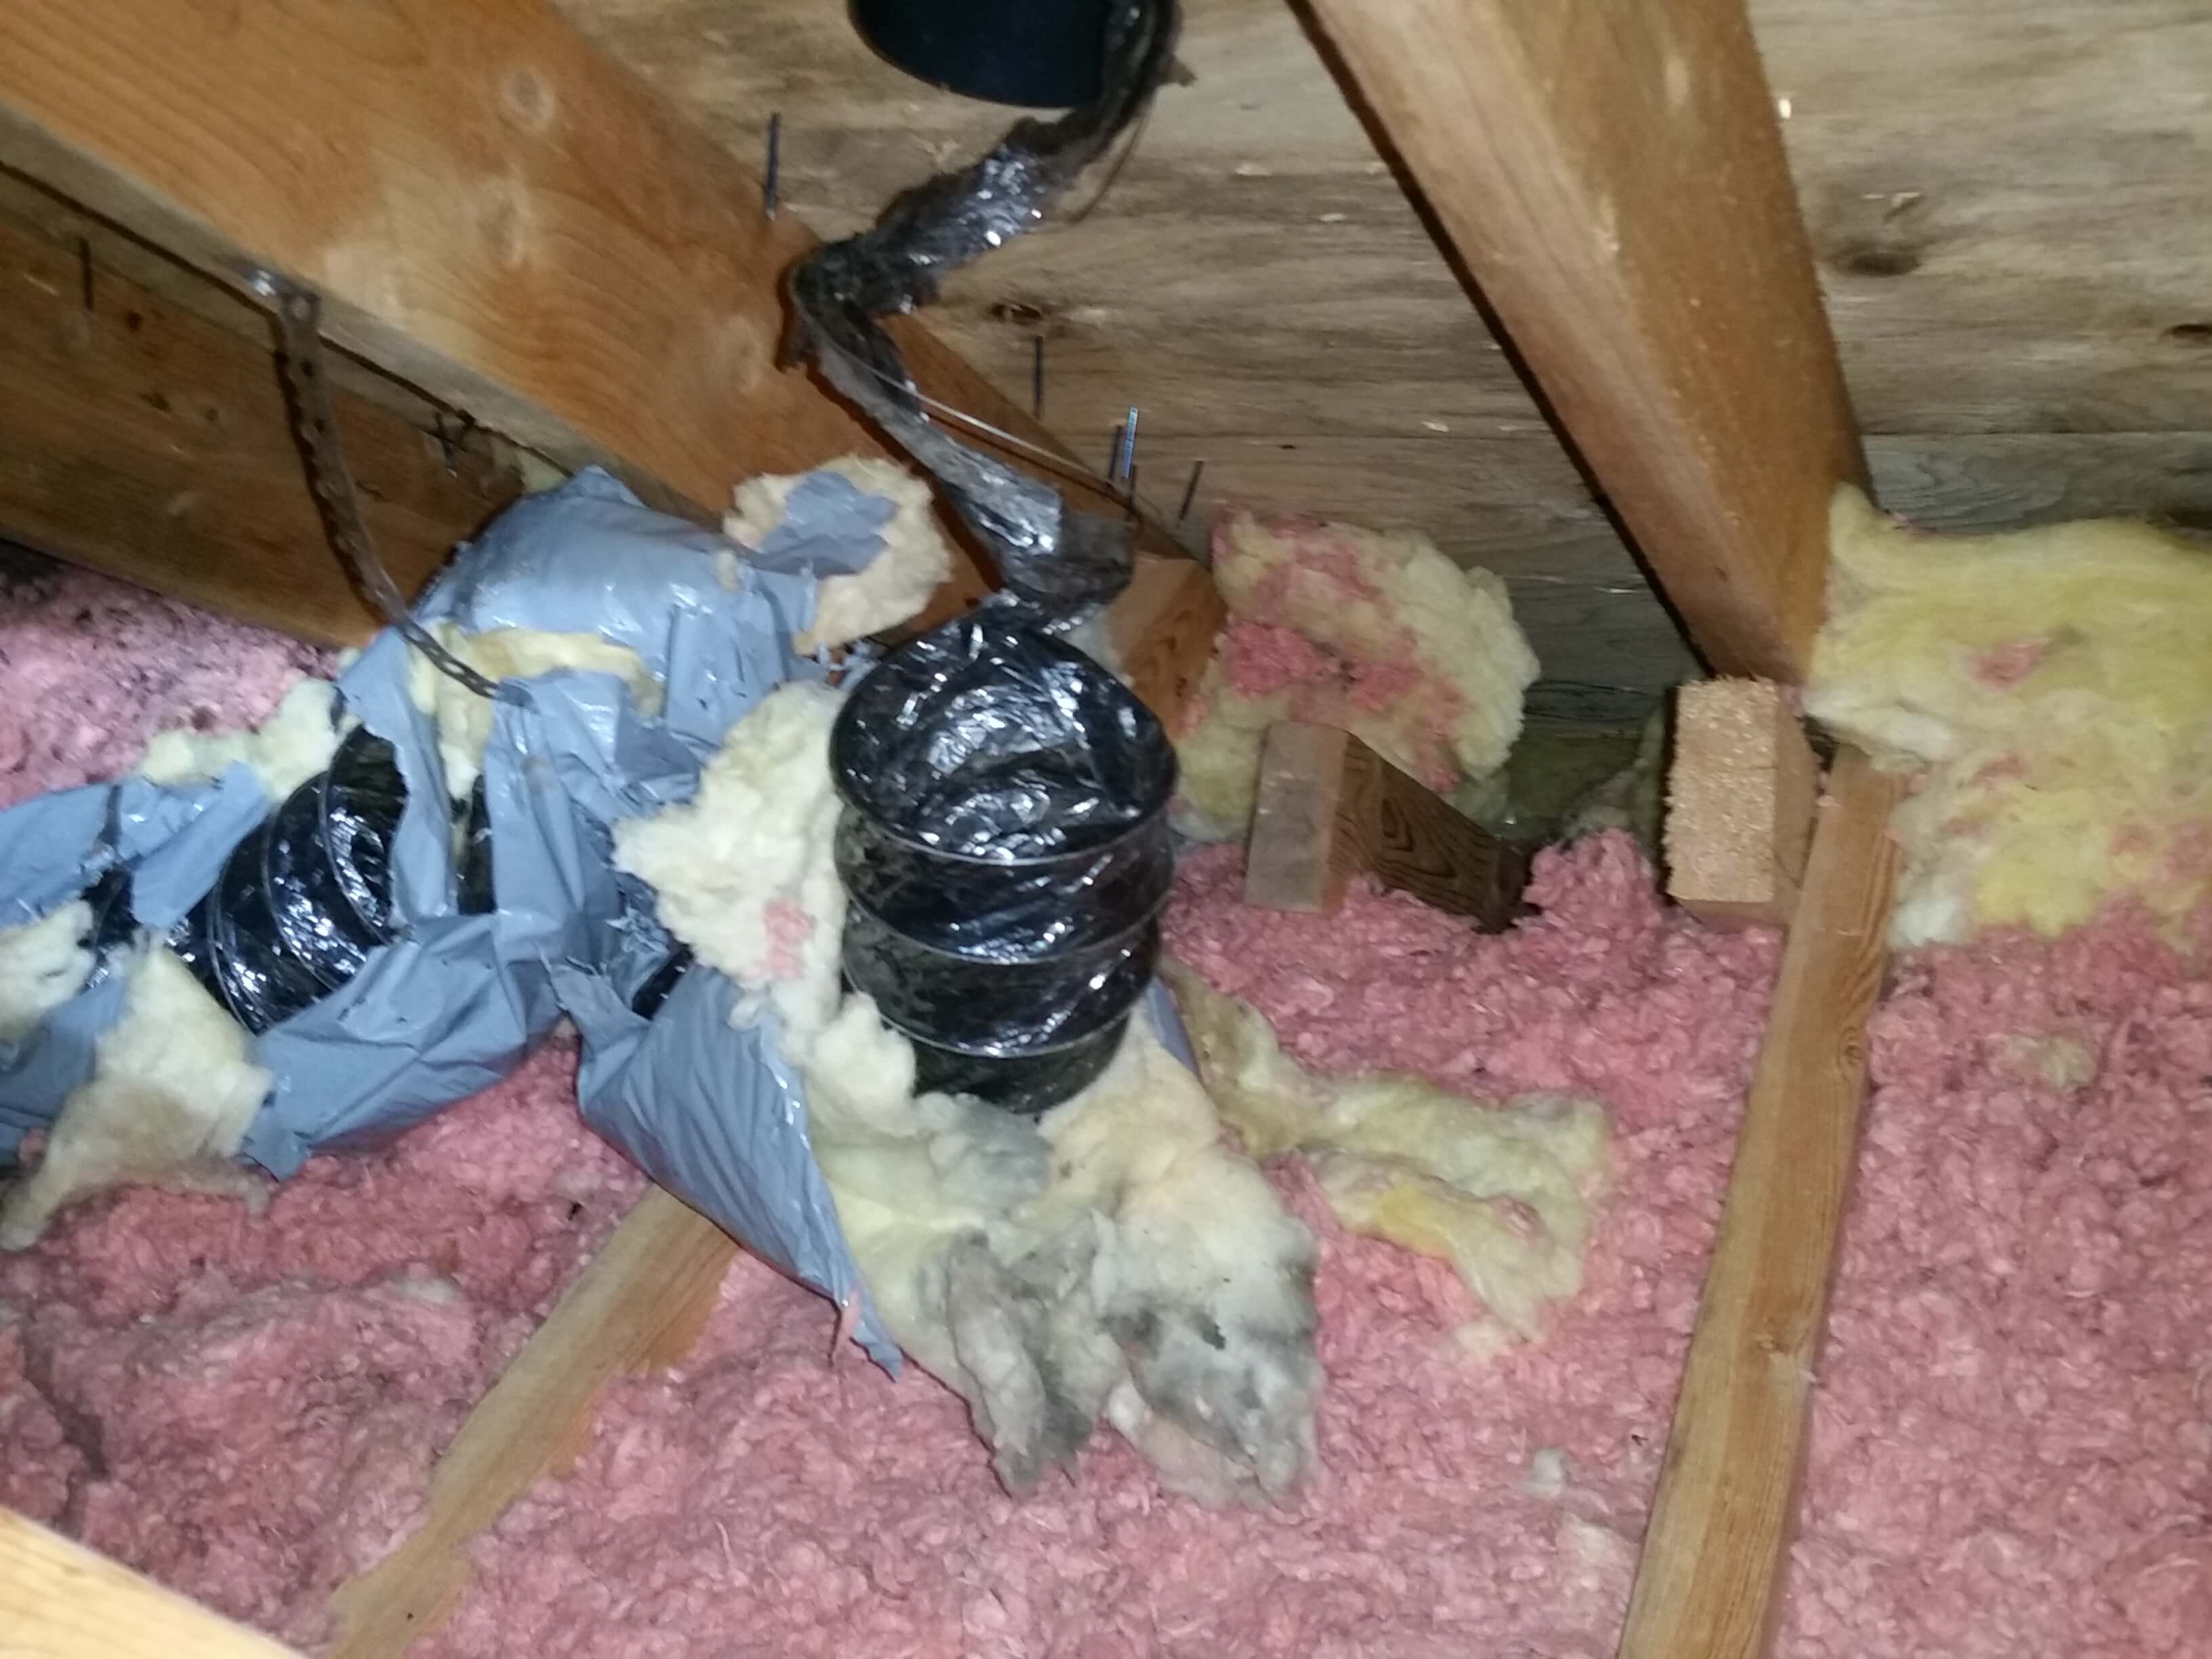 Raccoon damage to a bathroom fan vent running through an attic